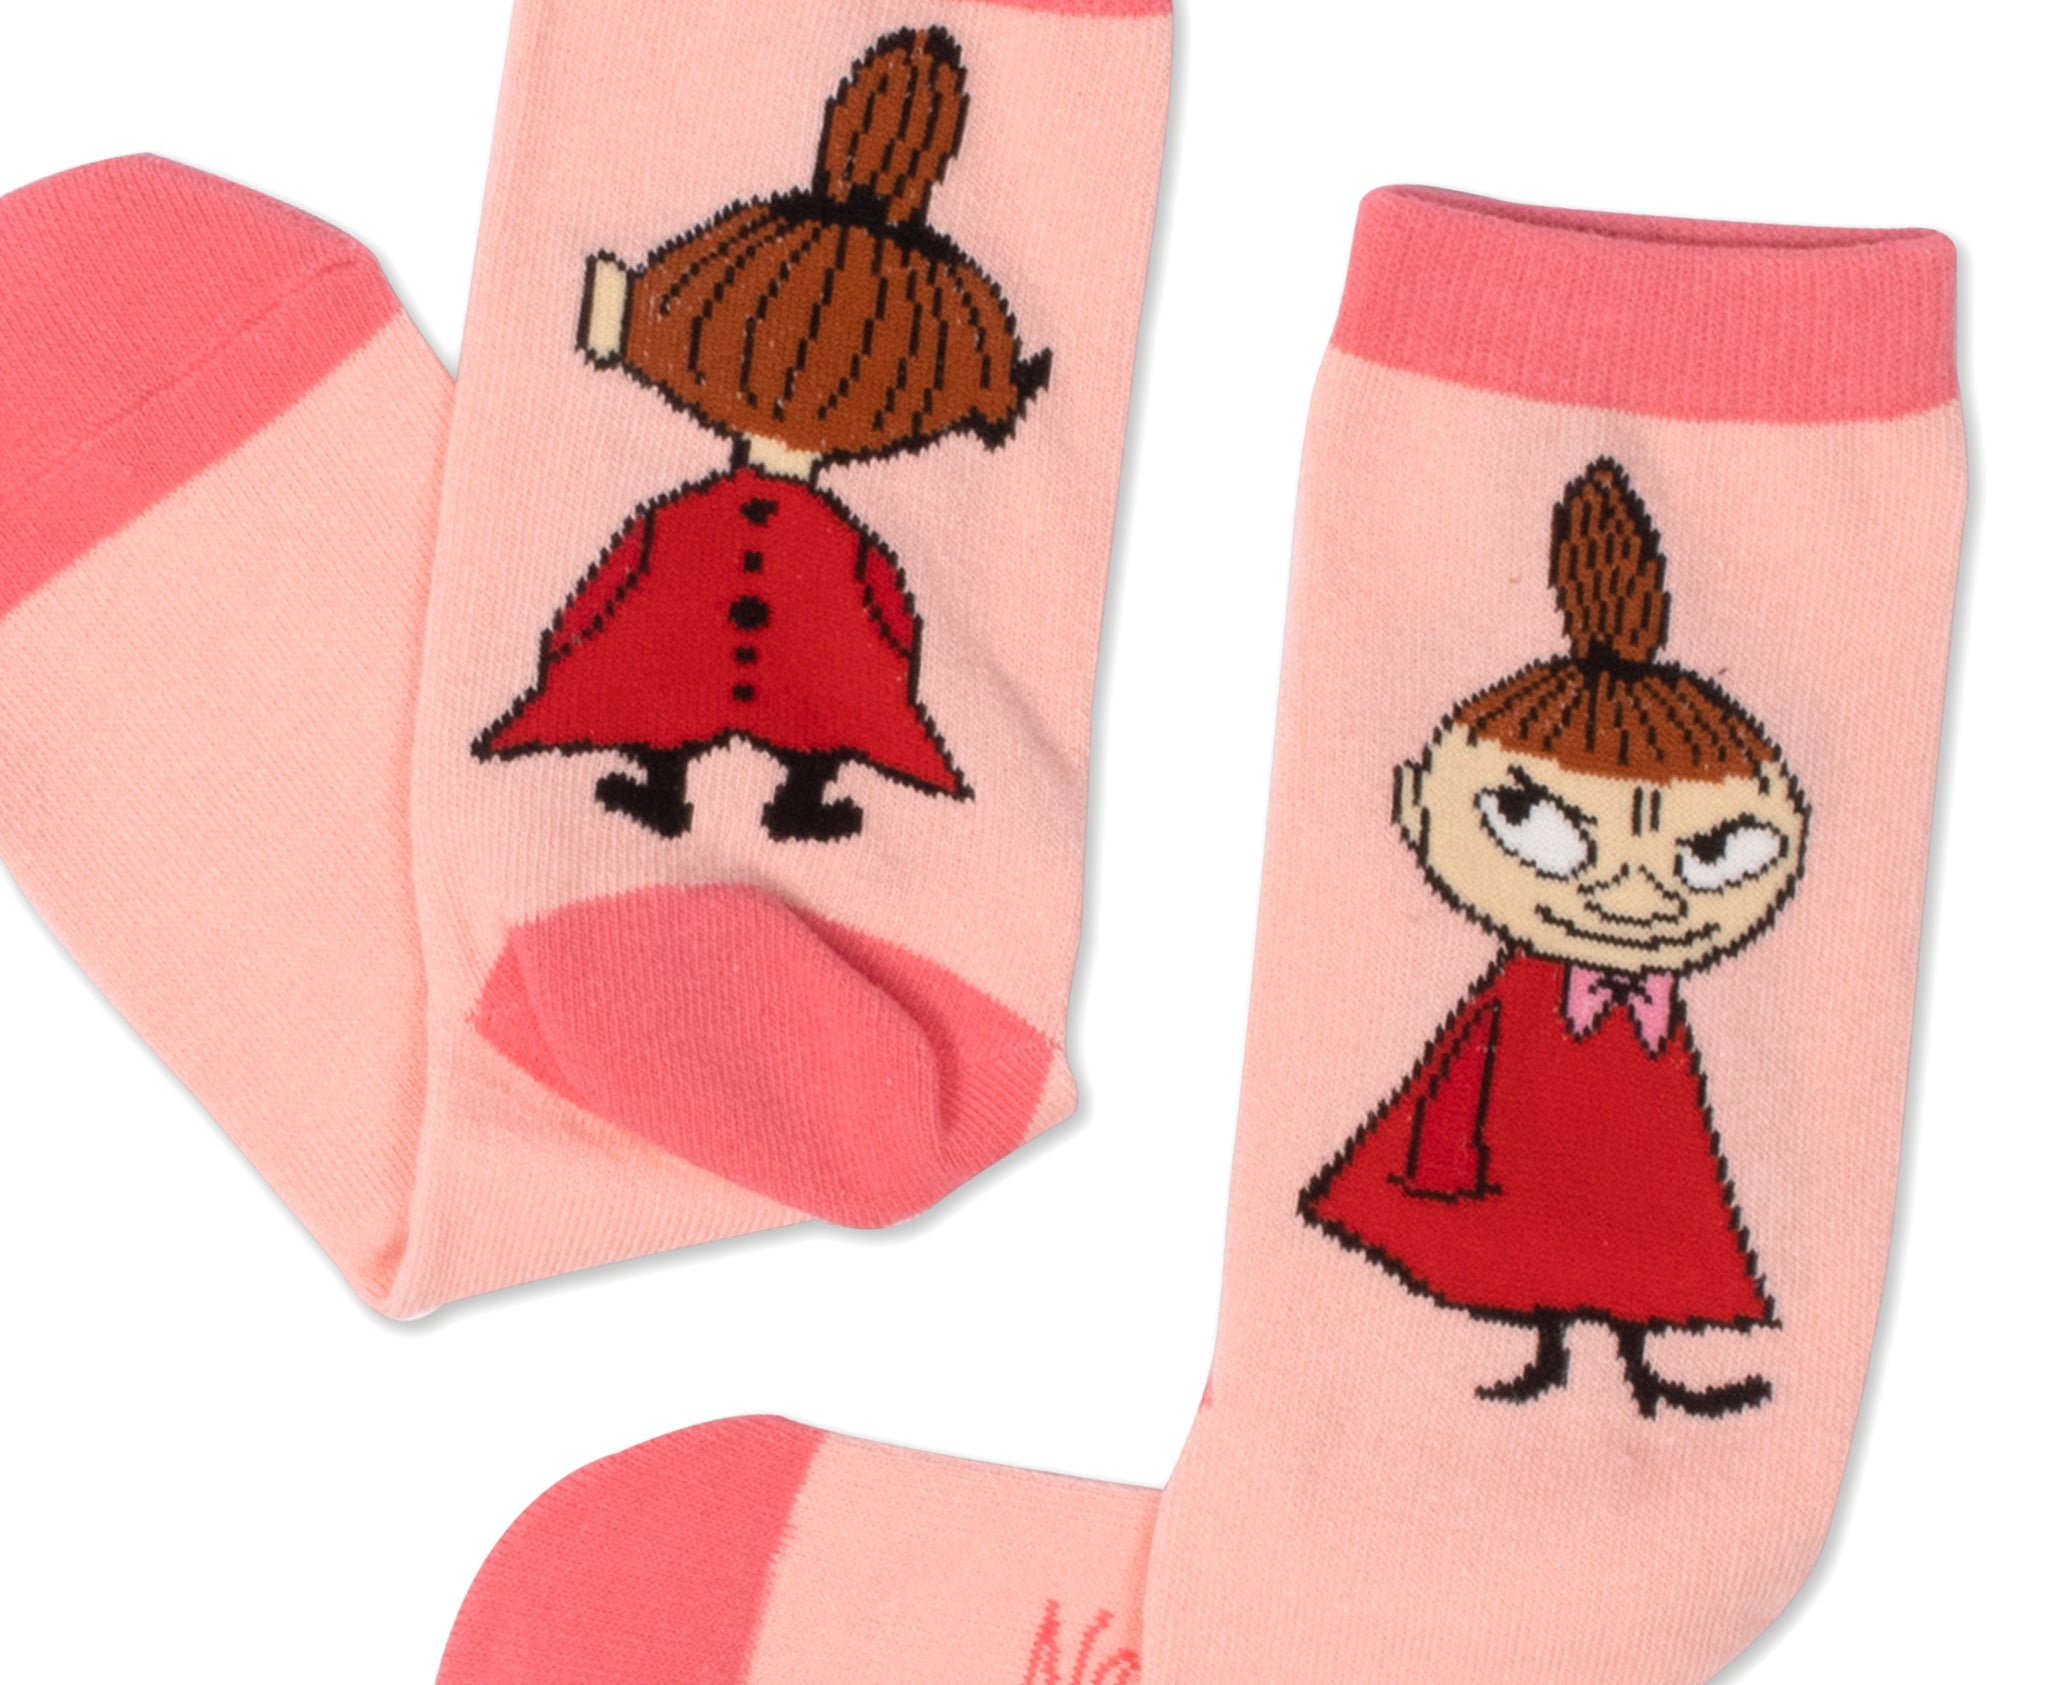 Little Mys Butt Ladies Socks - Pink